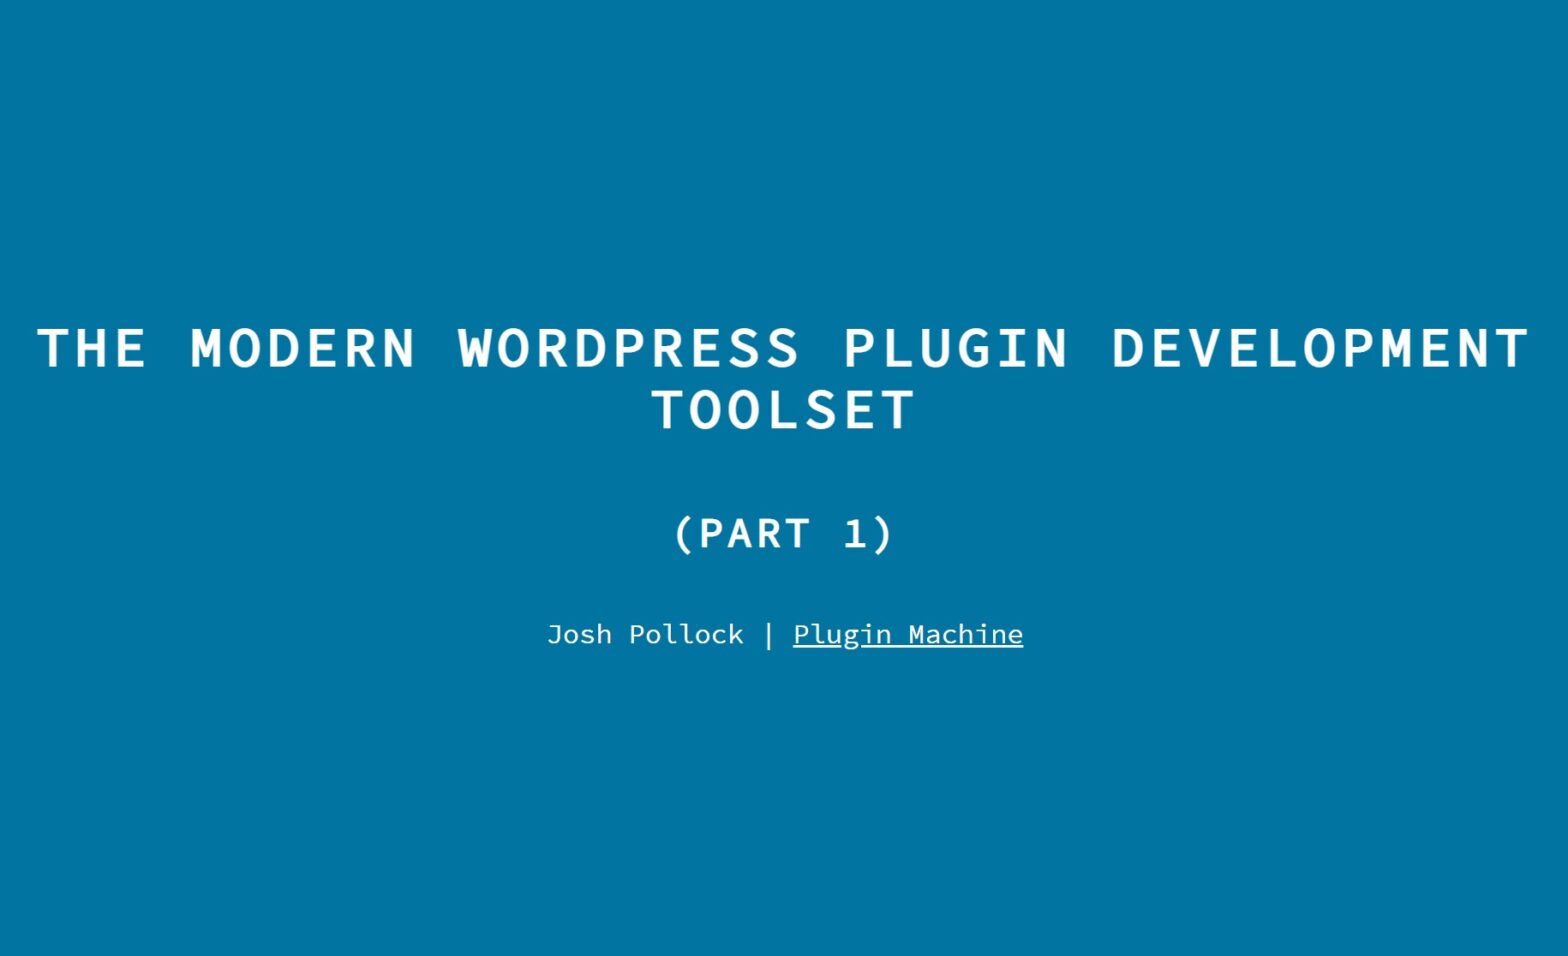 Title slide for "The Modern Plugin Development Toolset Part 1" talk